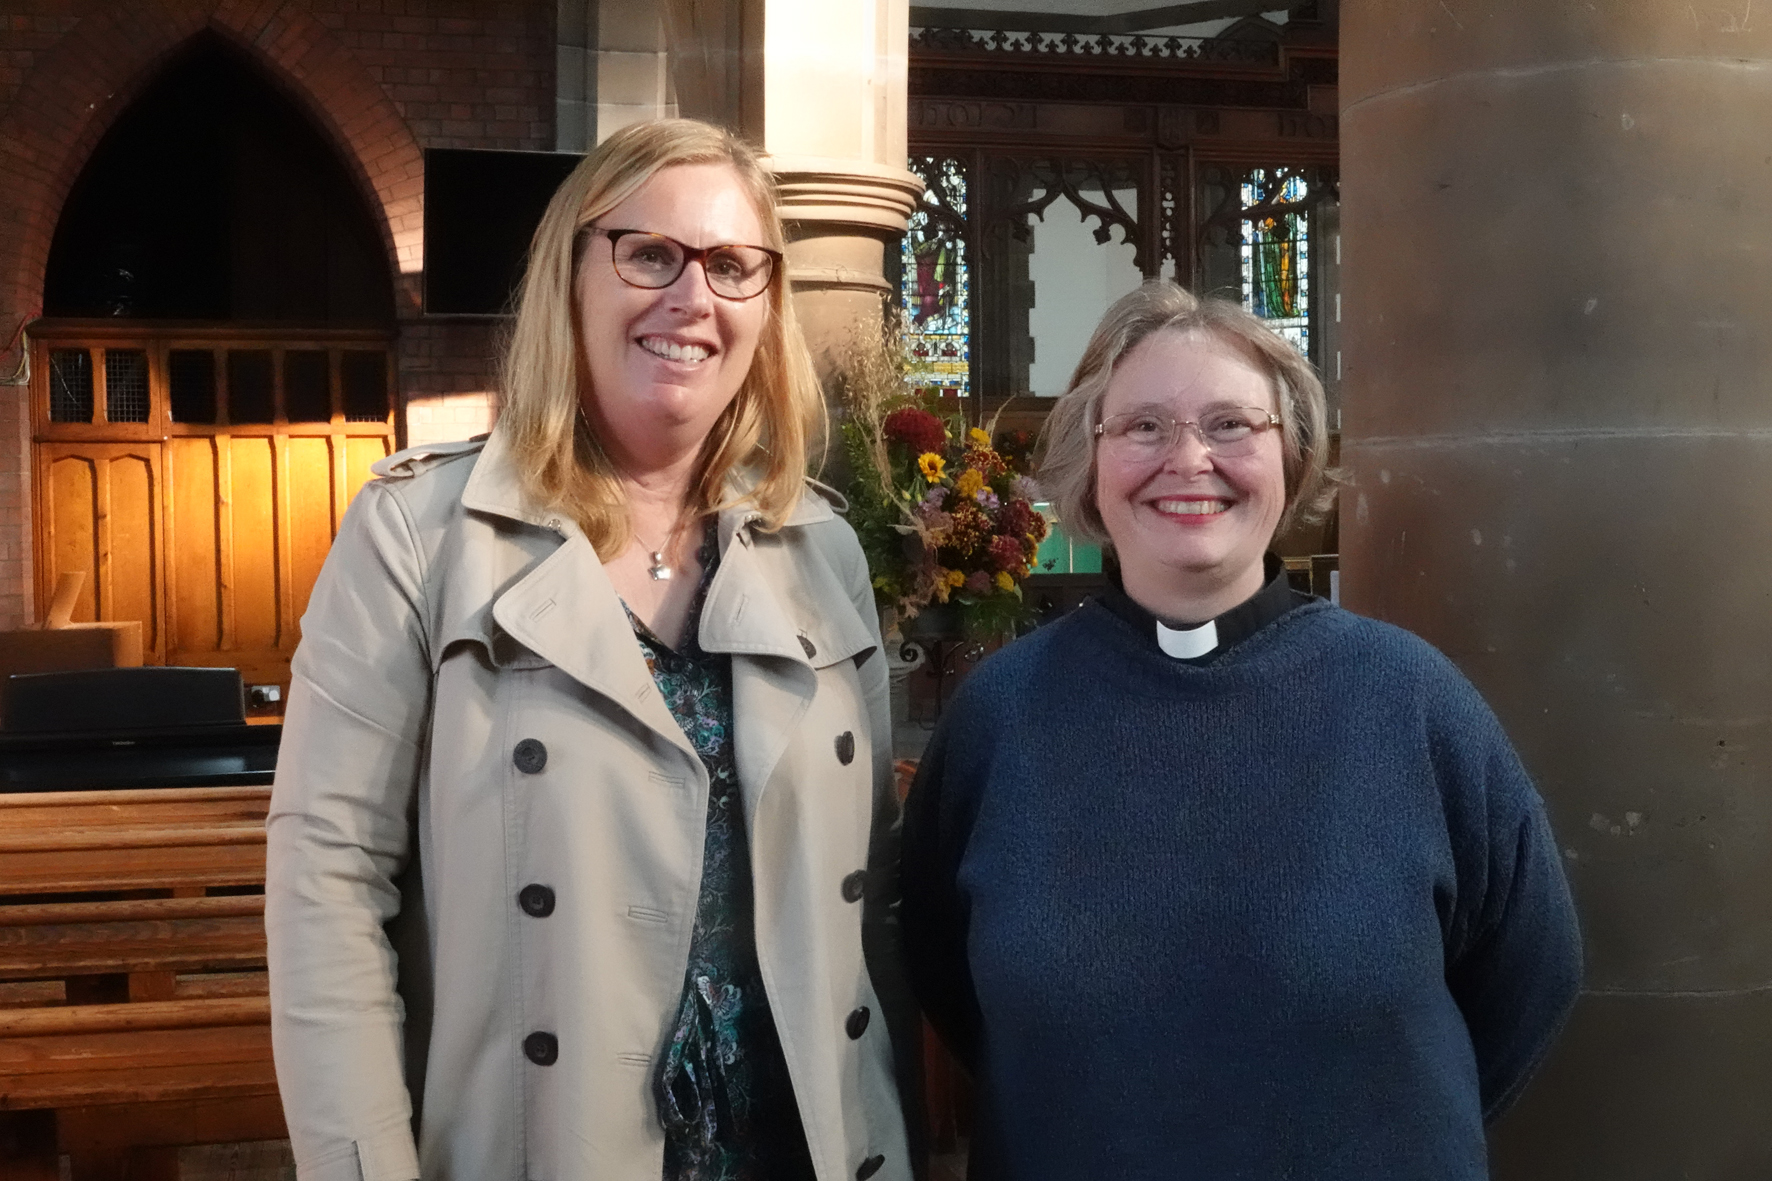 St Barnabas Head Sarah Hanson with vicar Sarah Northall